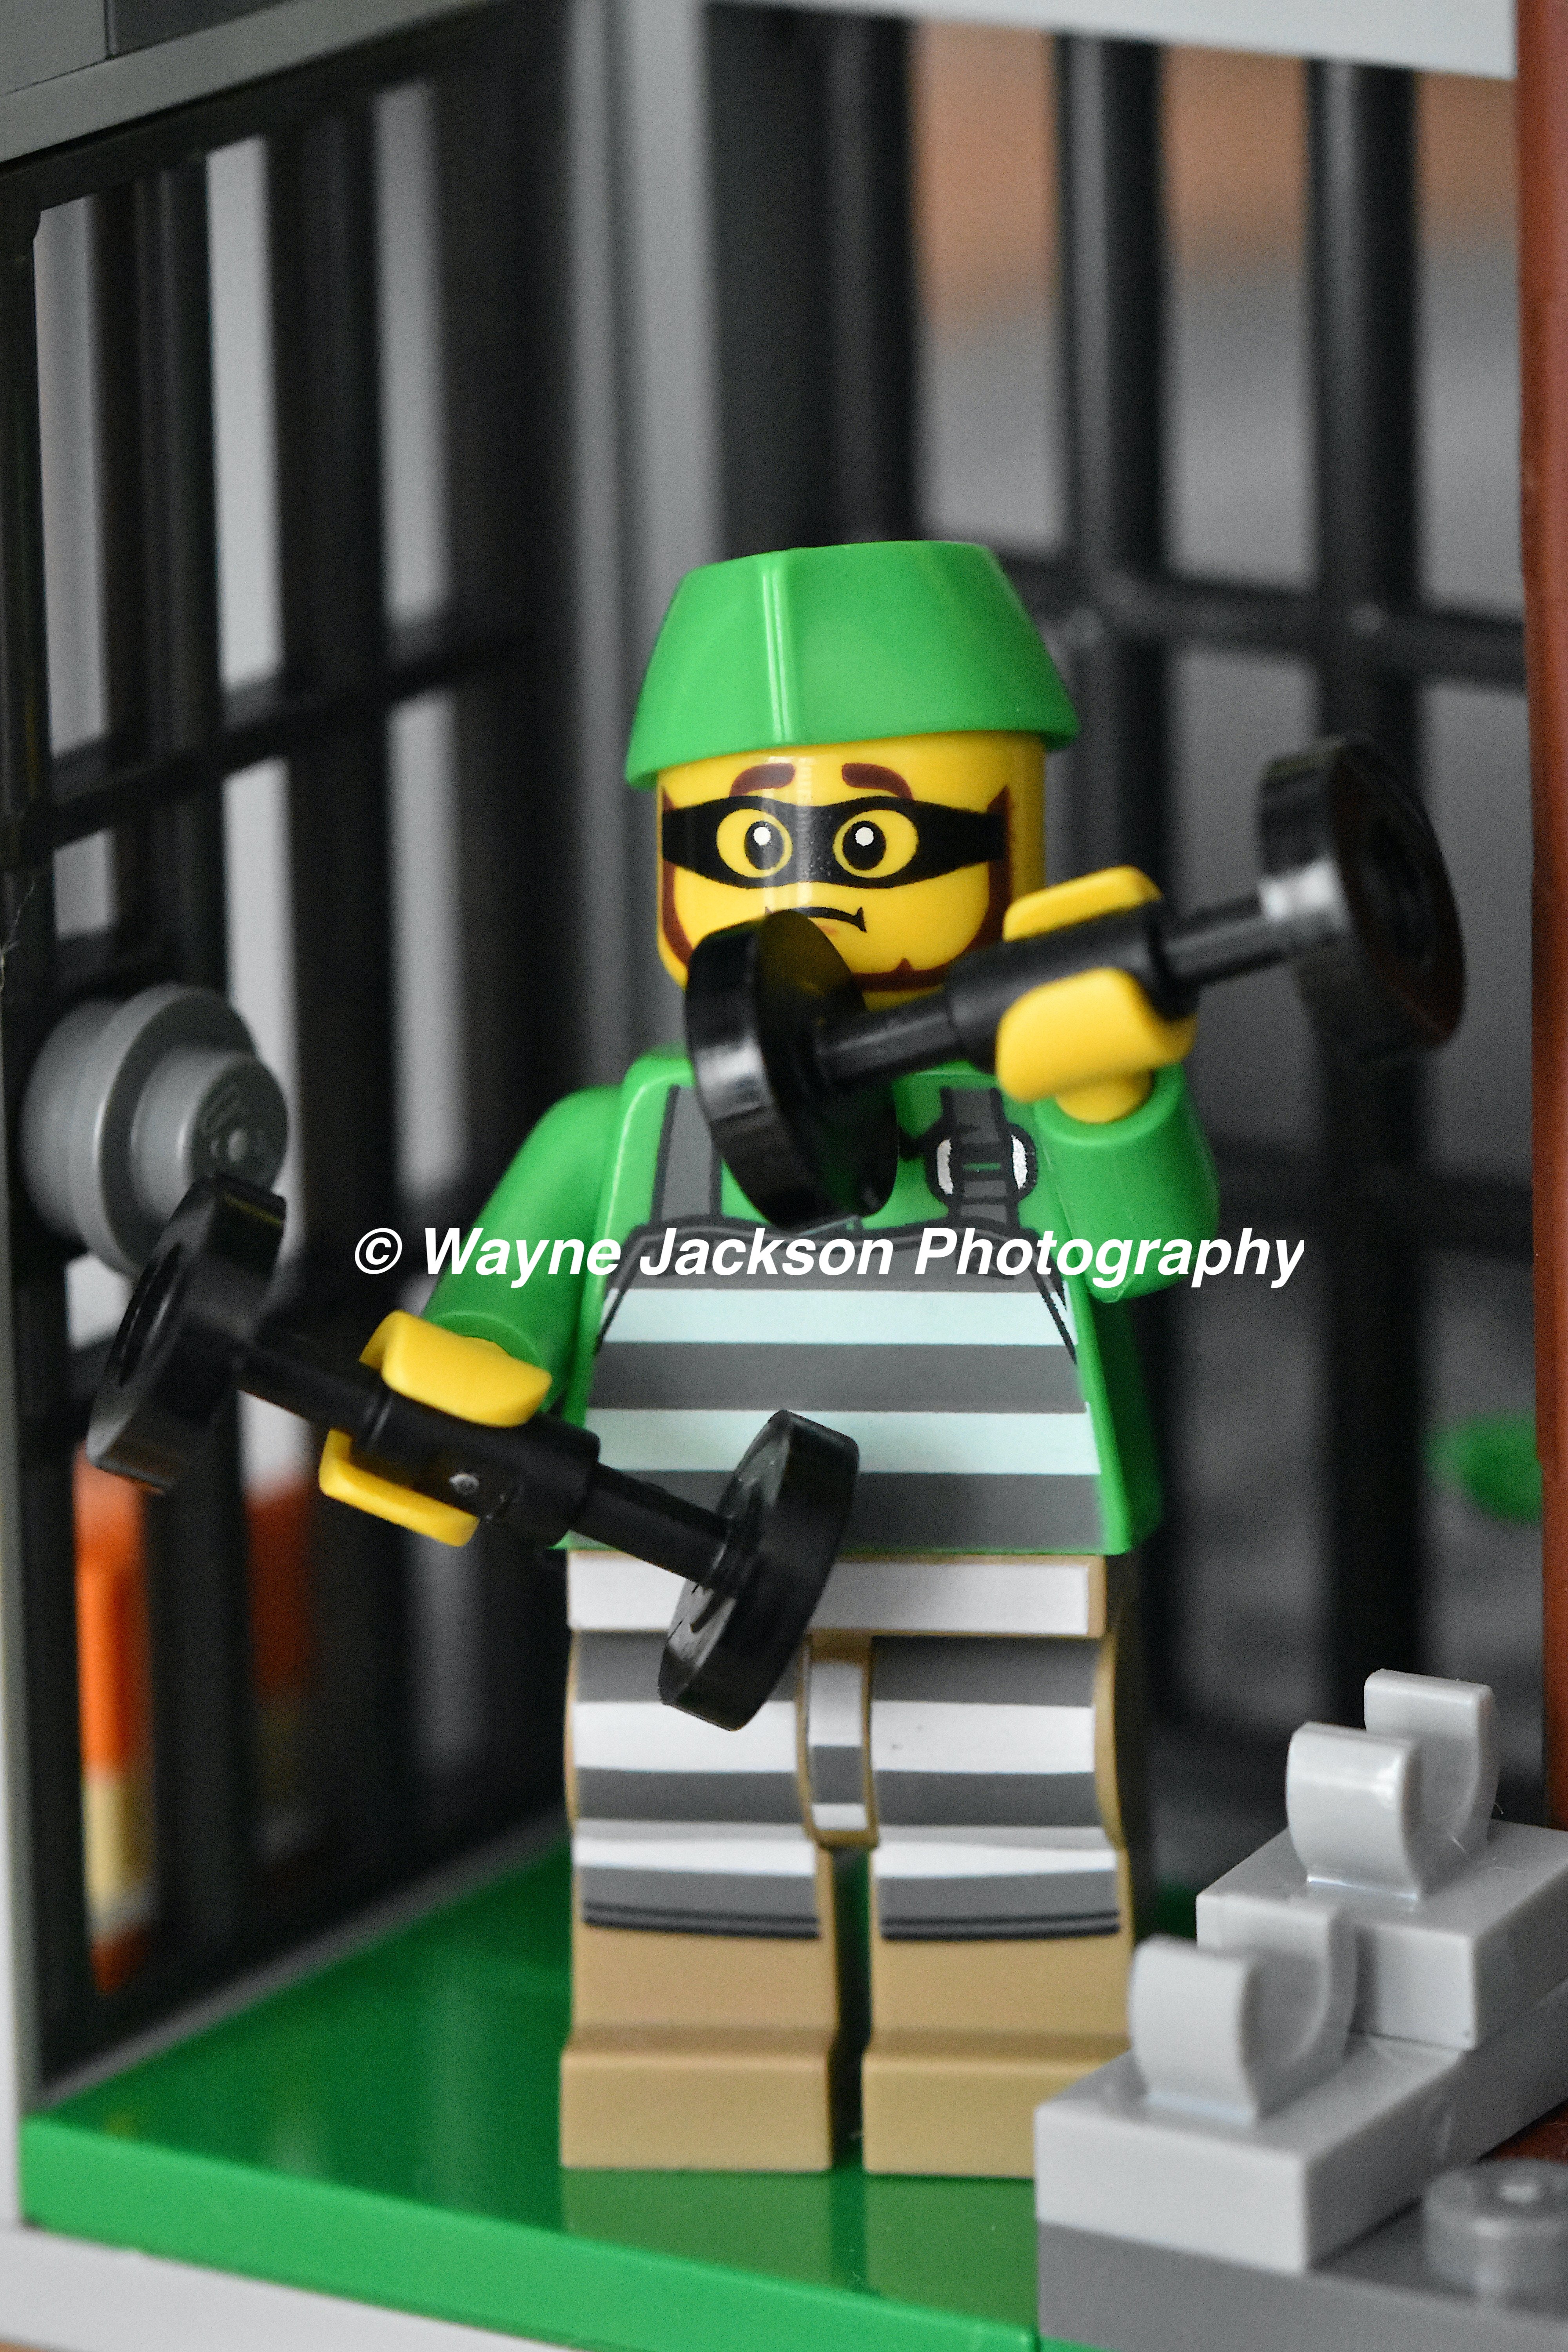 A Lego minifigure prisoner lifting dumbbells